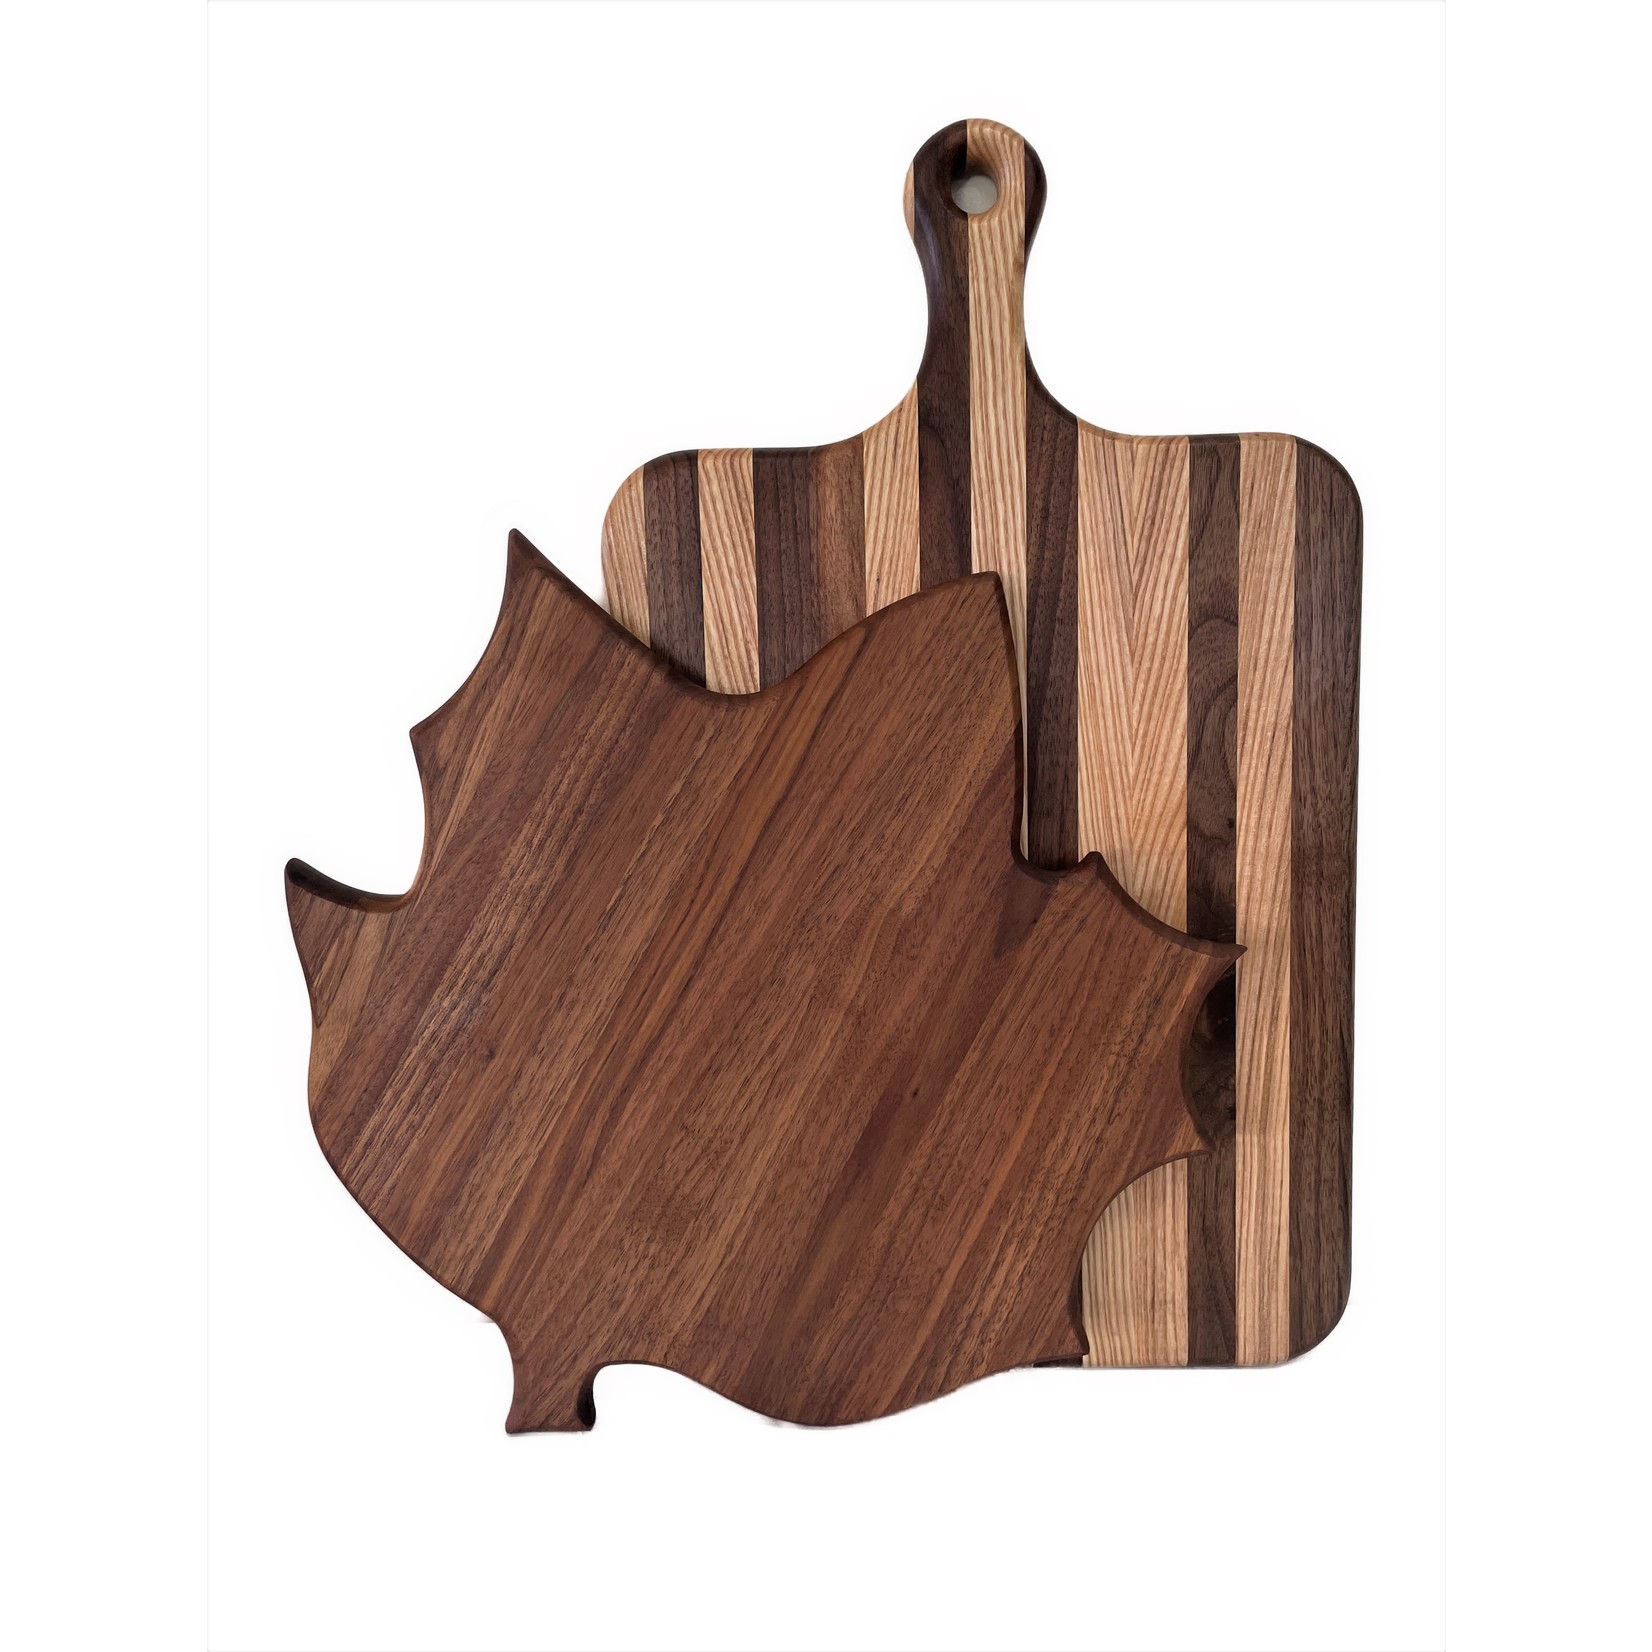 Maple Leaf Charcuterie Board